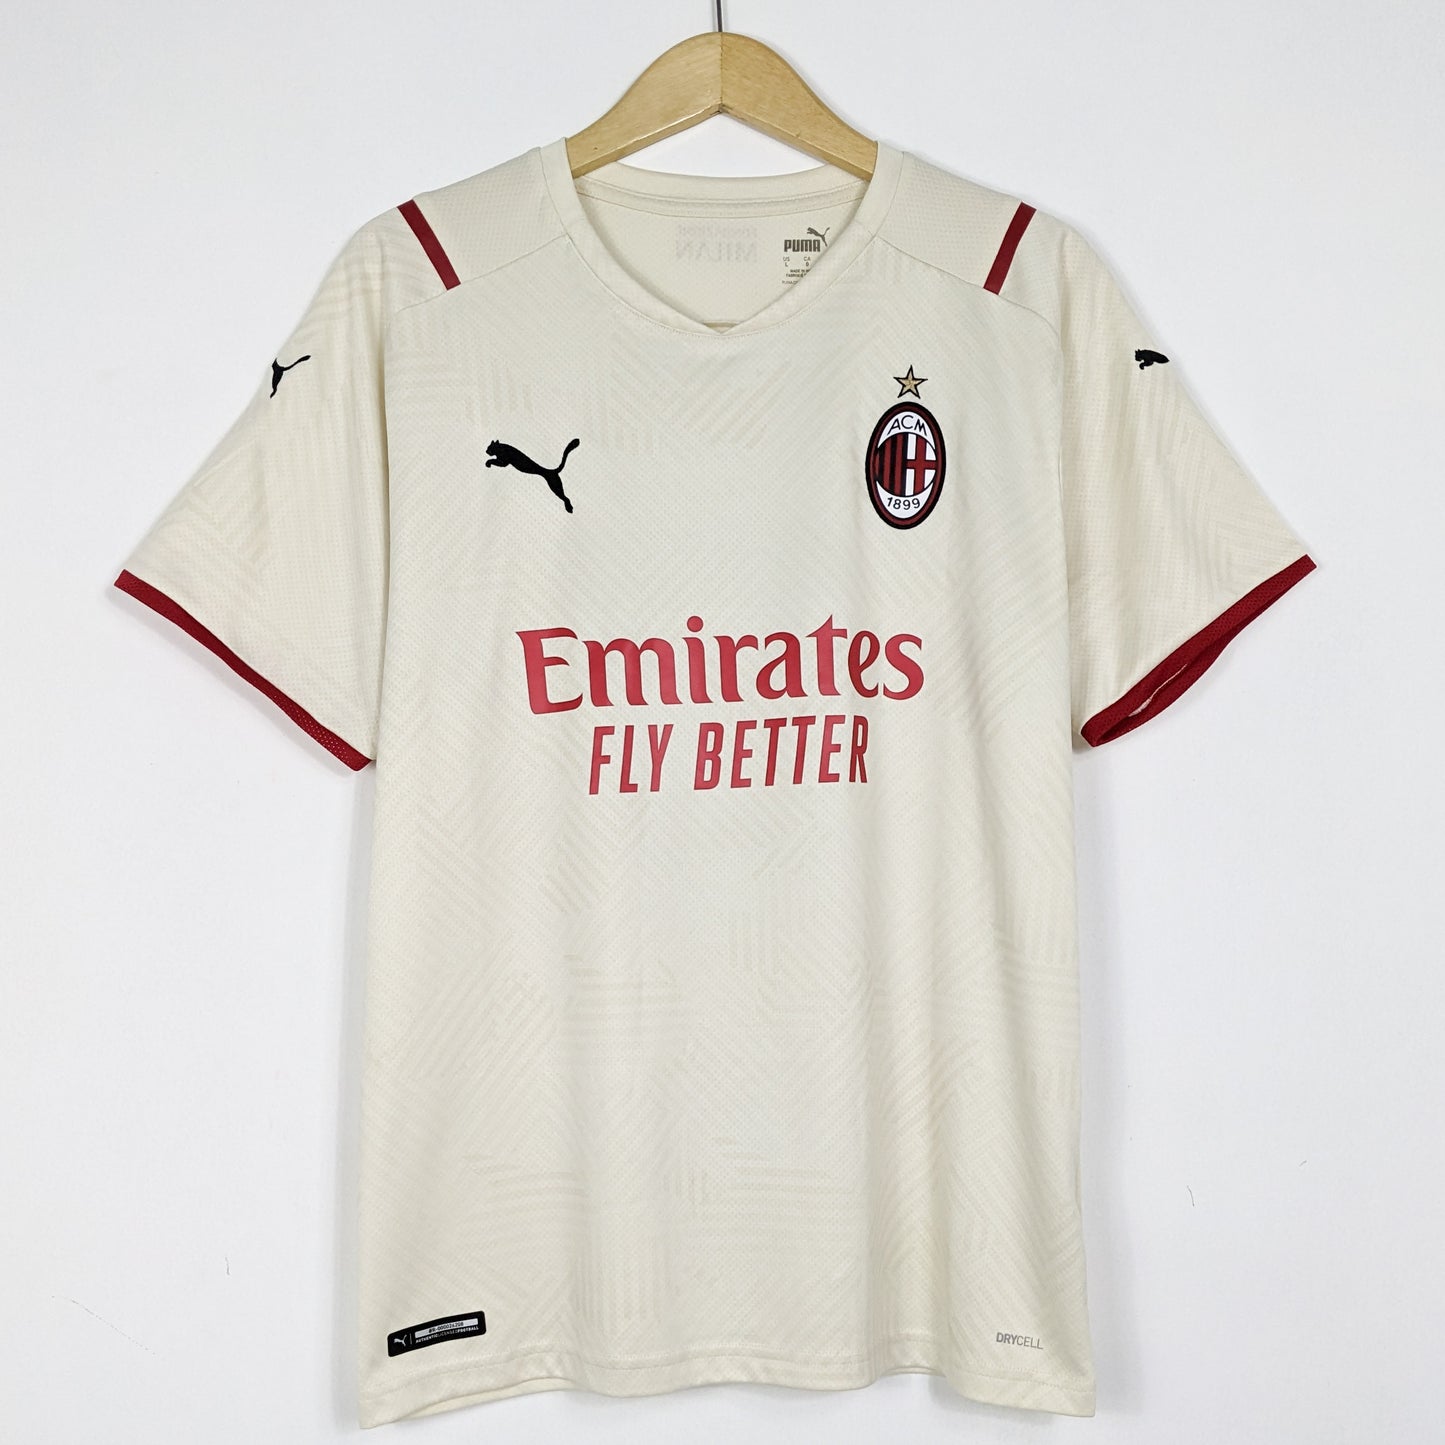 Authentic AC Milan 20021/2022 Away - Giroud #9 Size L